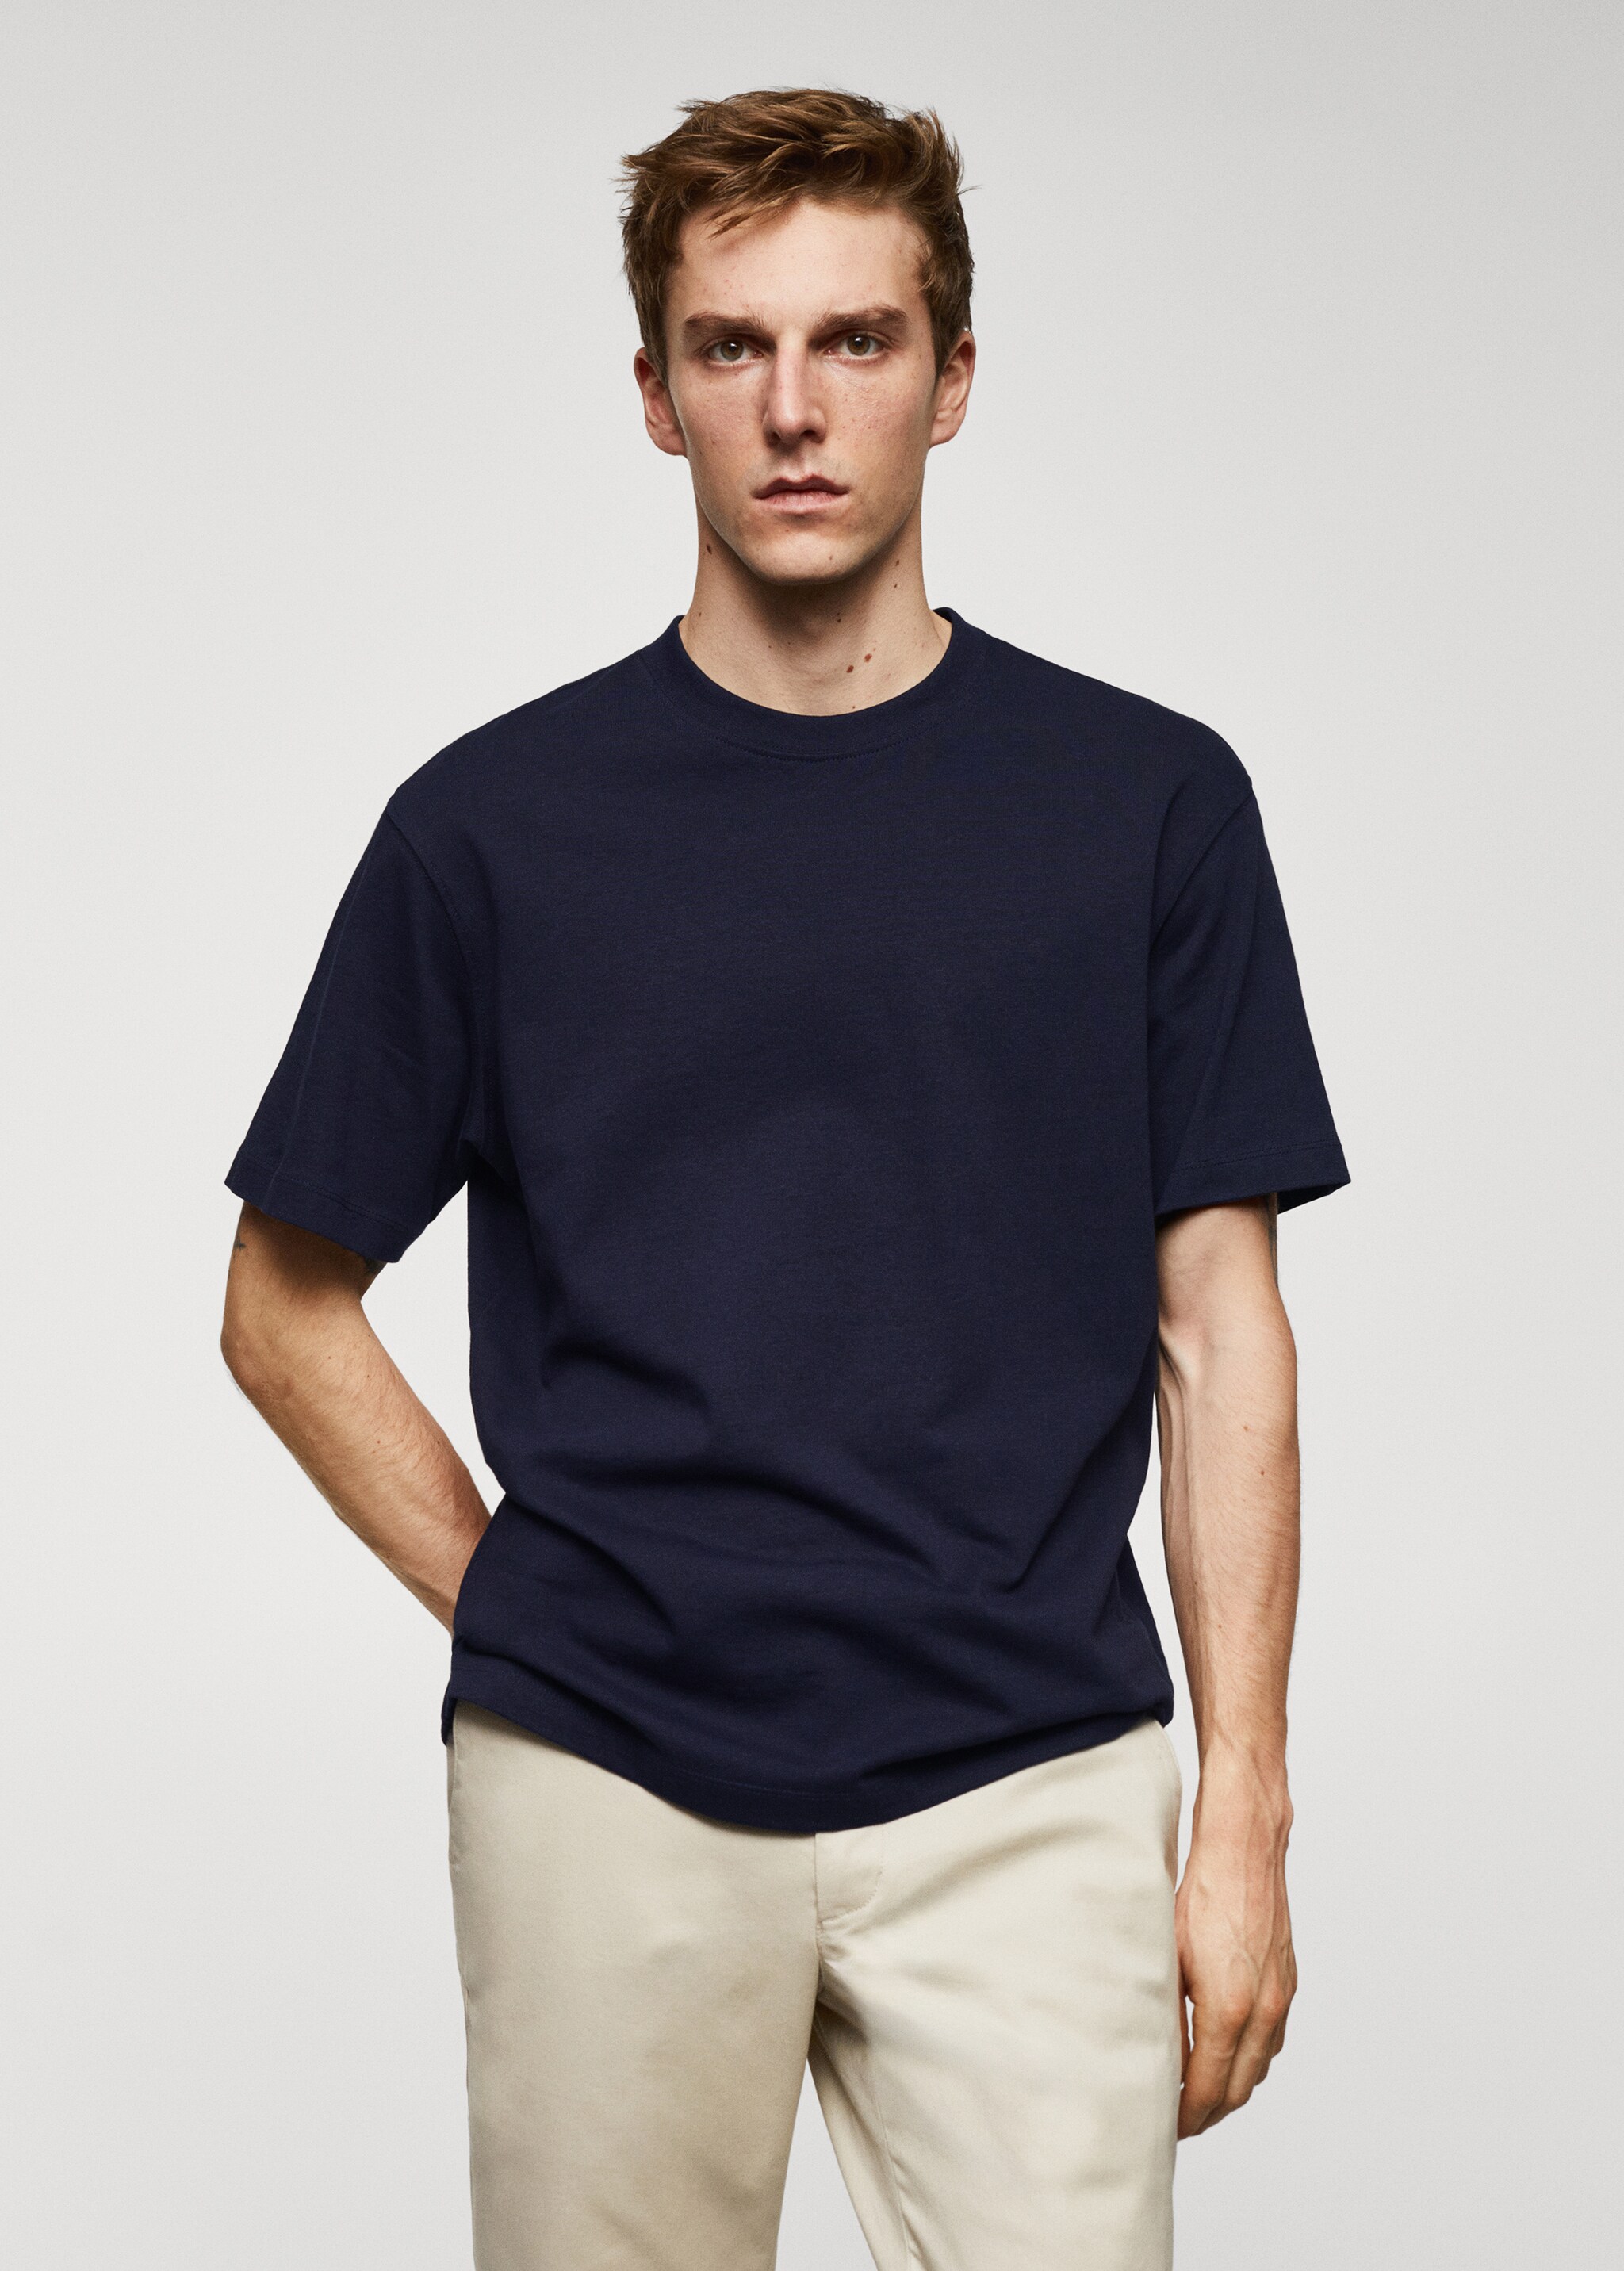 Basic 100% cotton relaxed-fit t-shirt - Medium plane